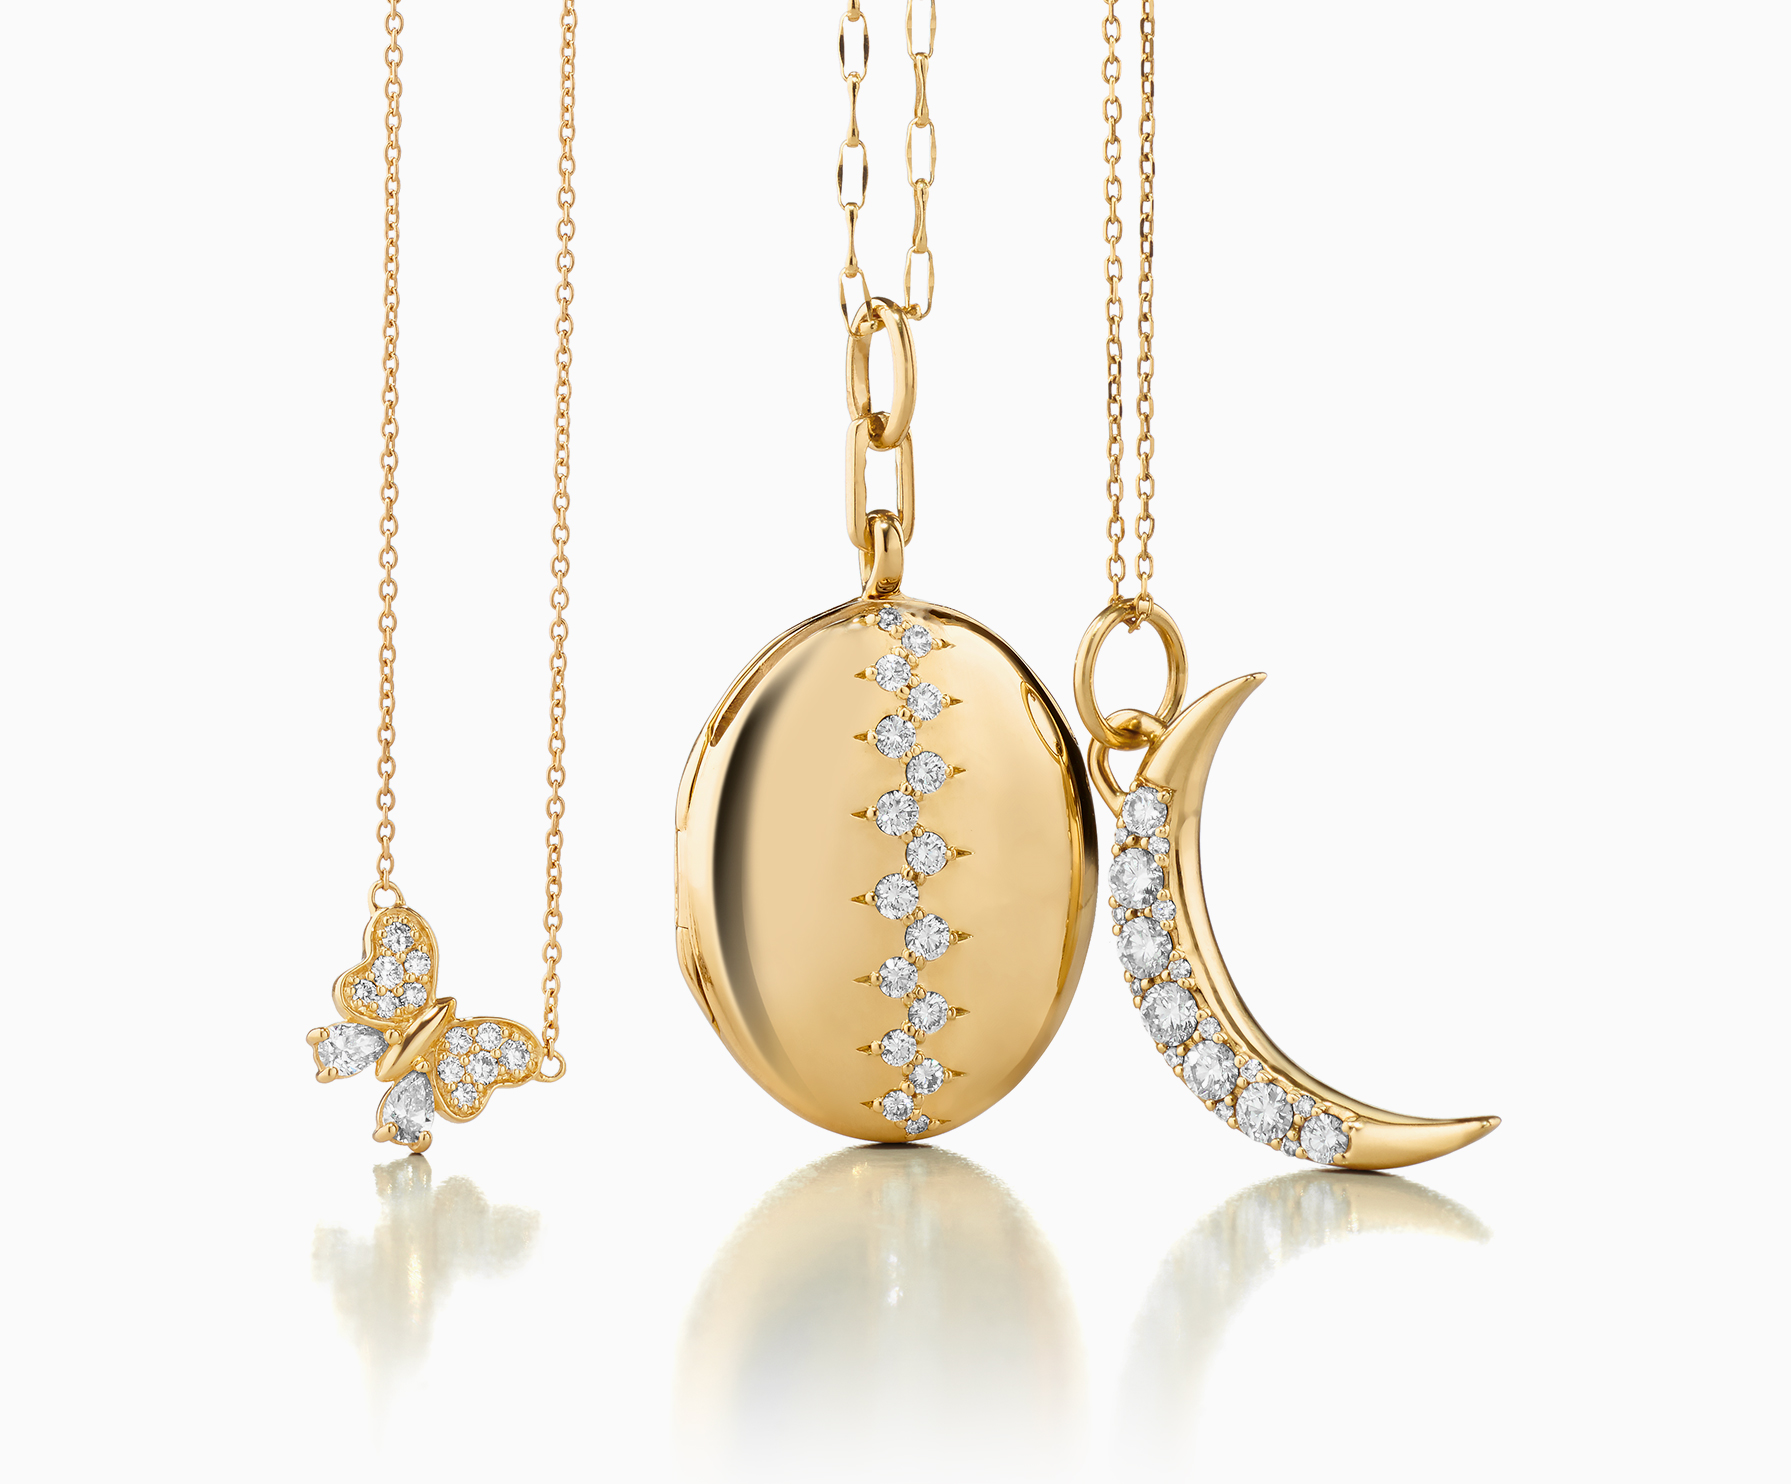 Diamond pendants and necklaces